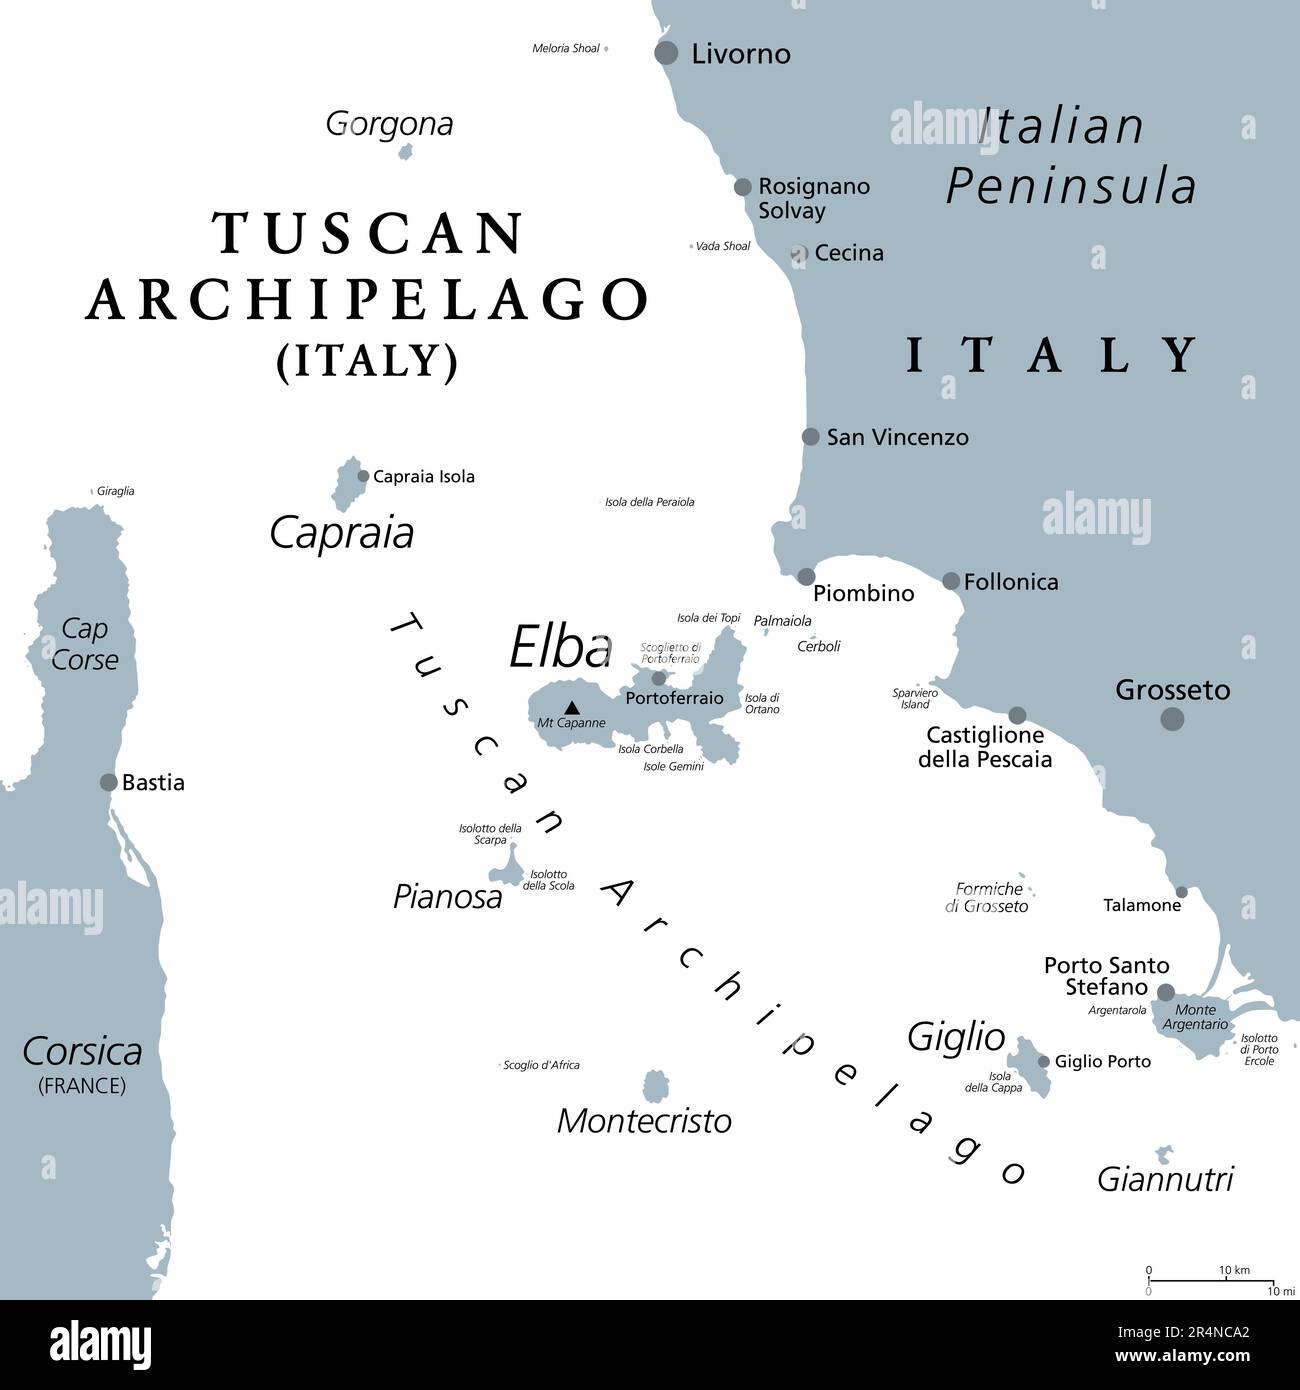 Toskana-Archipel, Italien, graue politische Karte. Inselkette zwischen dem ligurischen und dem Tyrrhenischen Meer, zwischen Korsika und der italienischen Halbinsel. Stockfoto